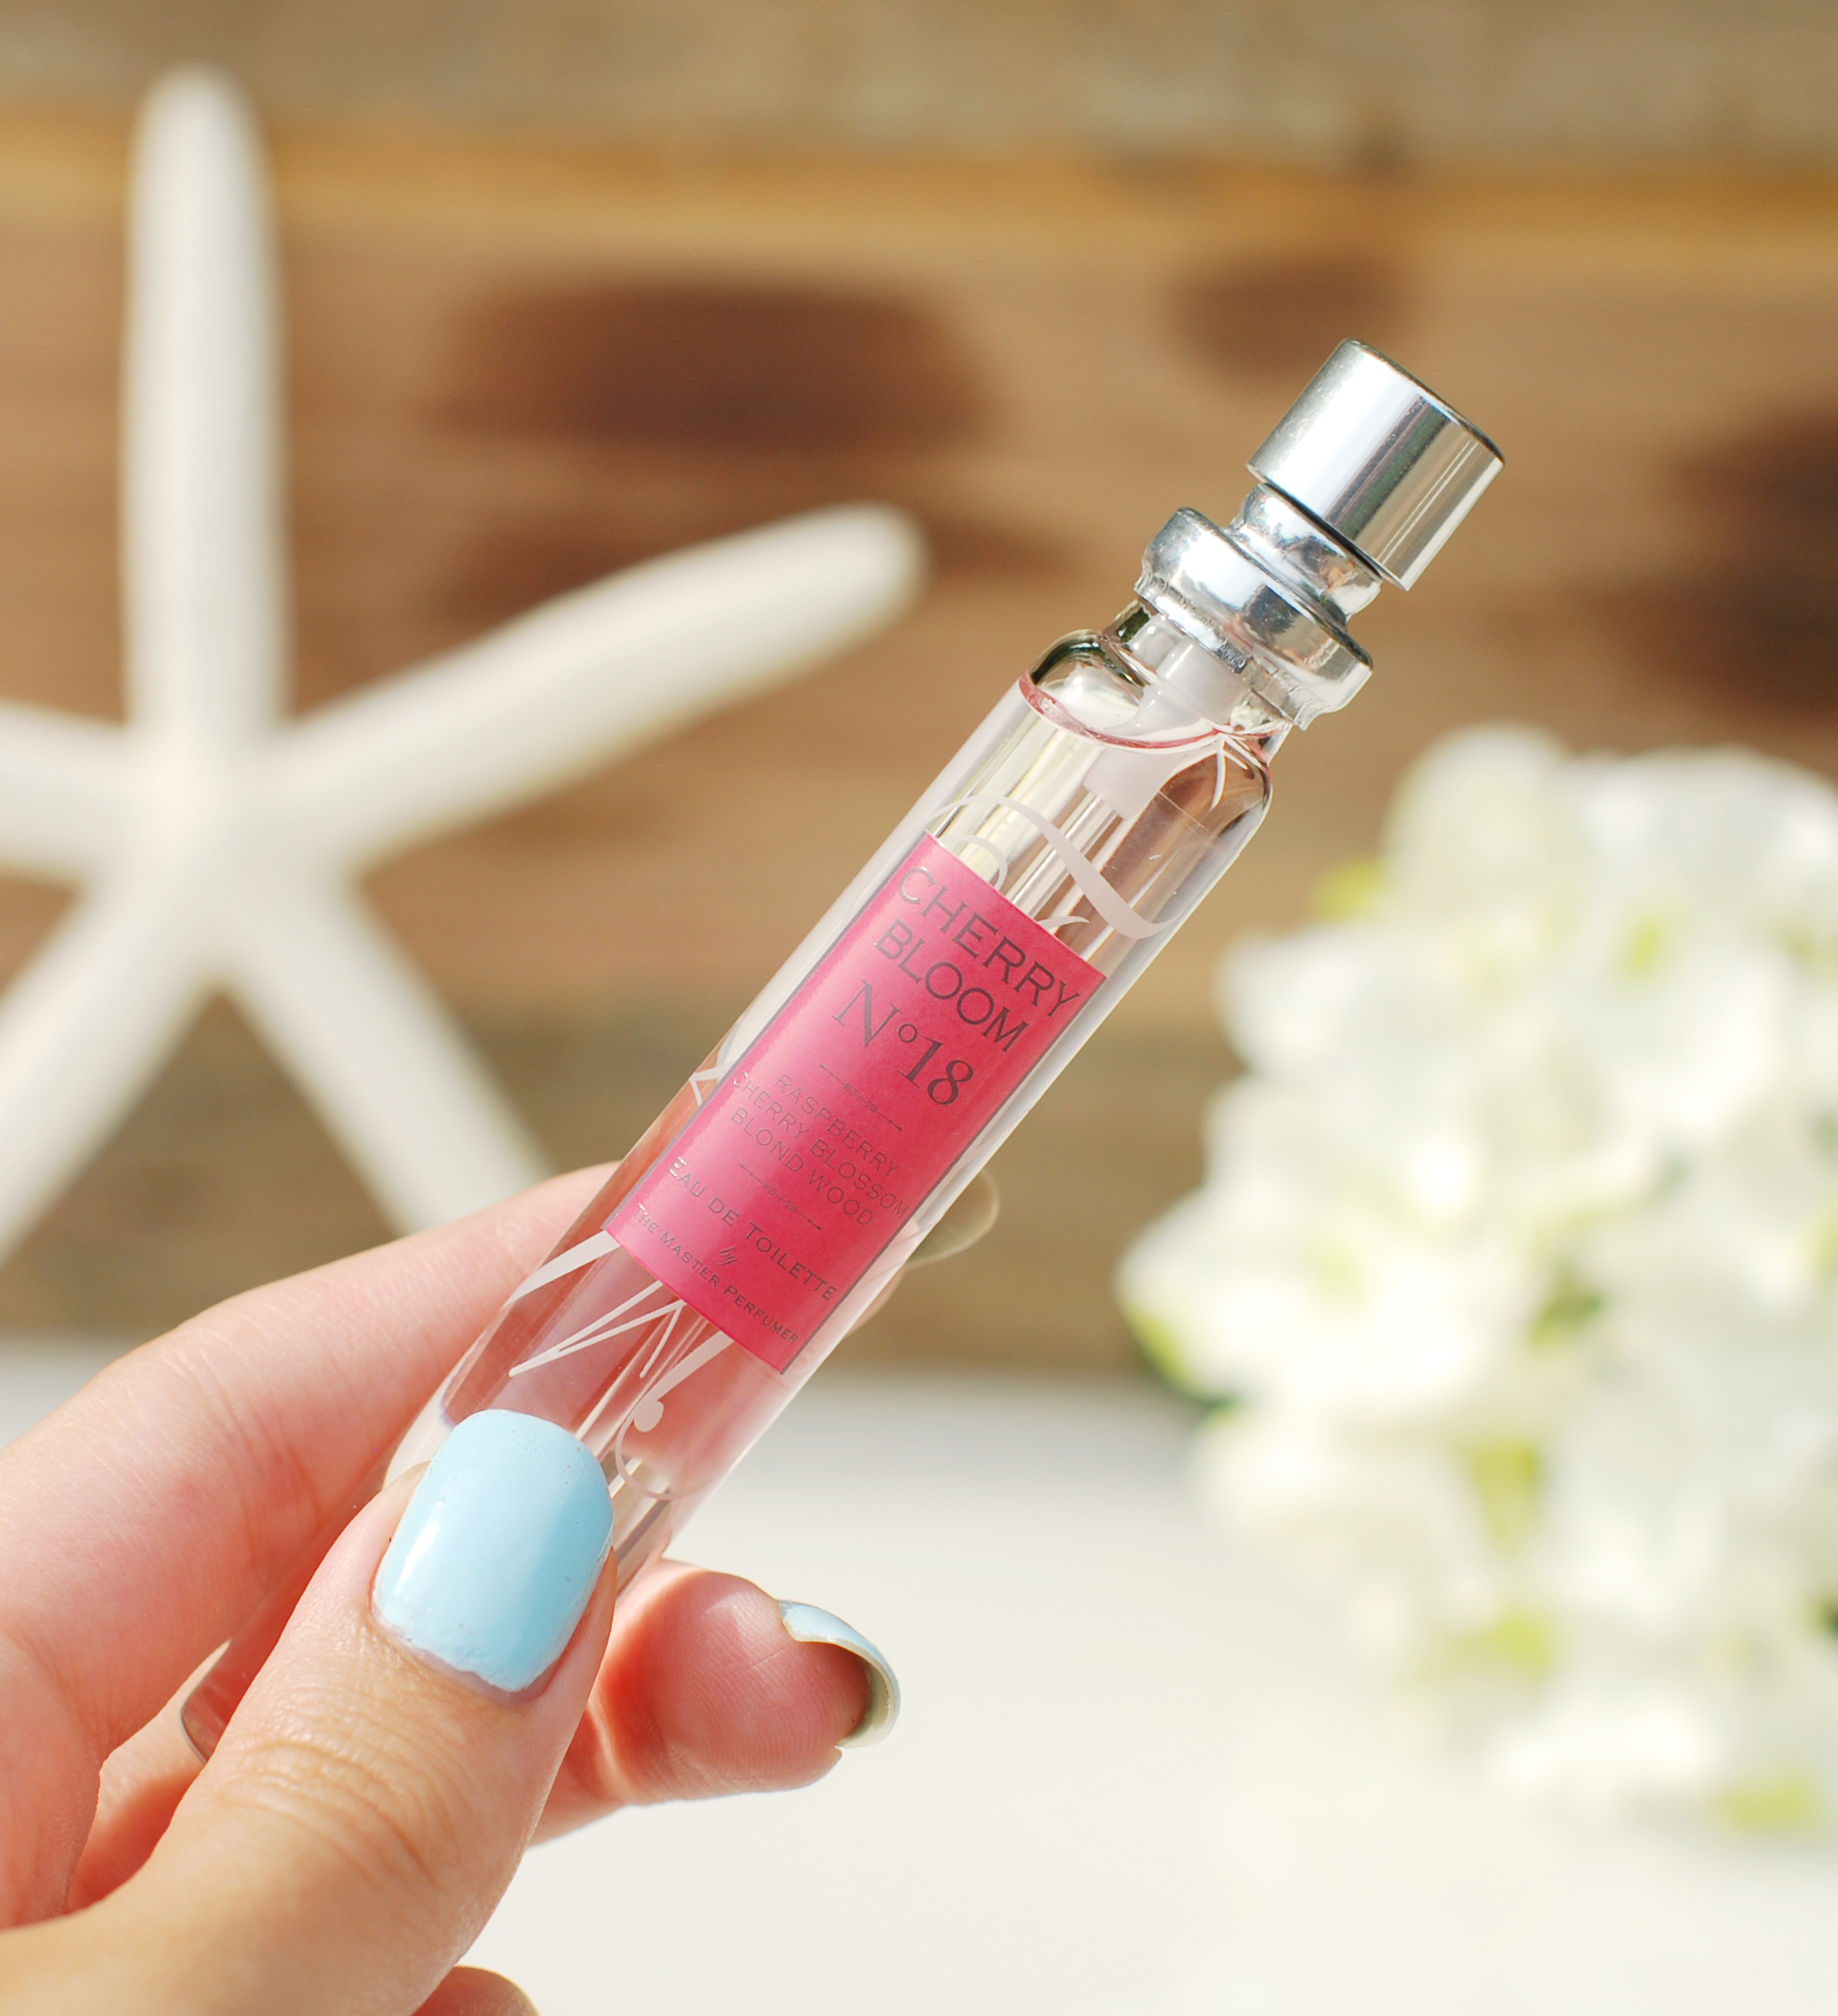 Cherry Bloom N18 eau de toilette for het kruidvat The master perfumer review lifestyle by linda